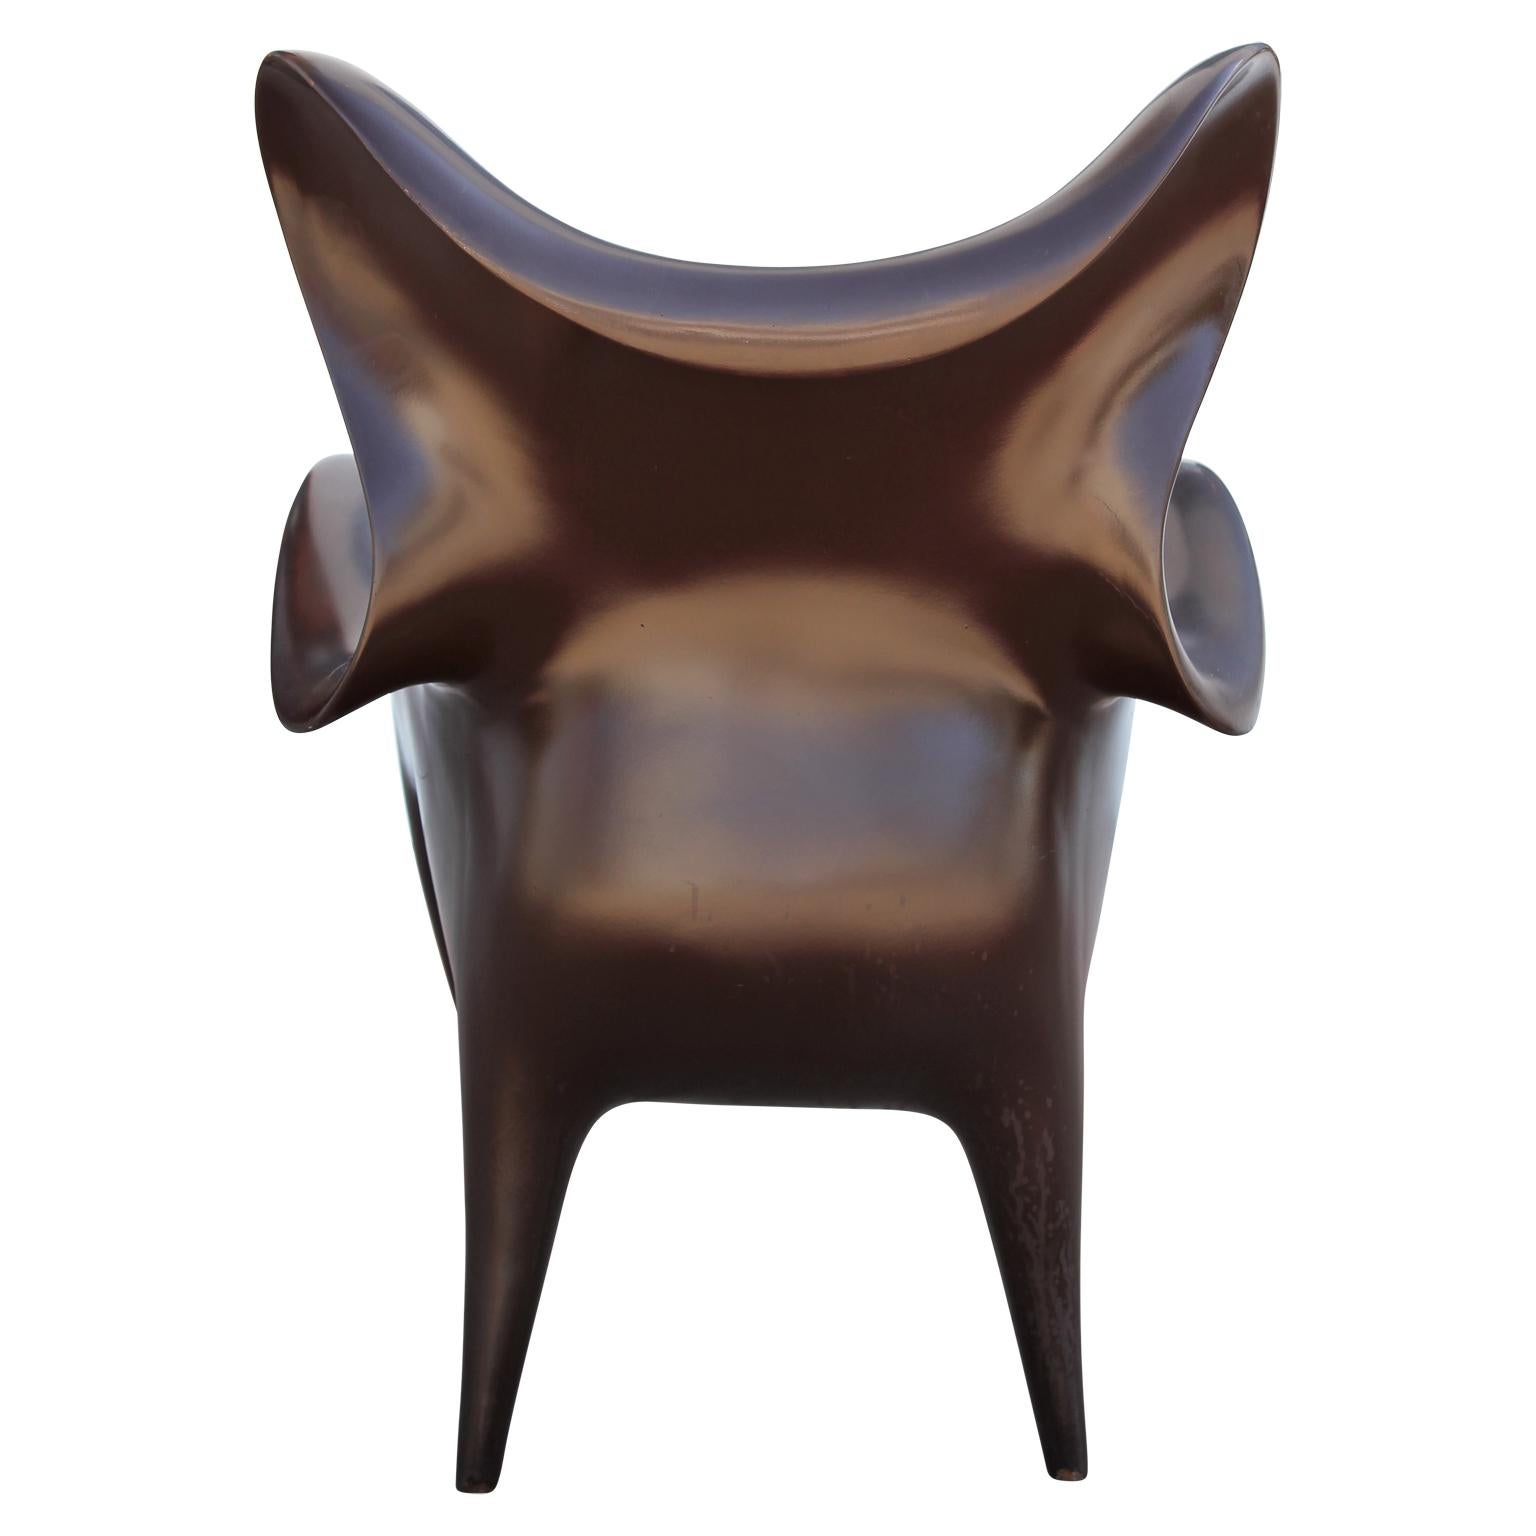 Pair of Modern Sculptural Johnnie Chairs by Jordan Mozer 4